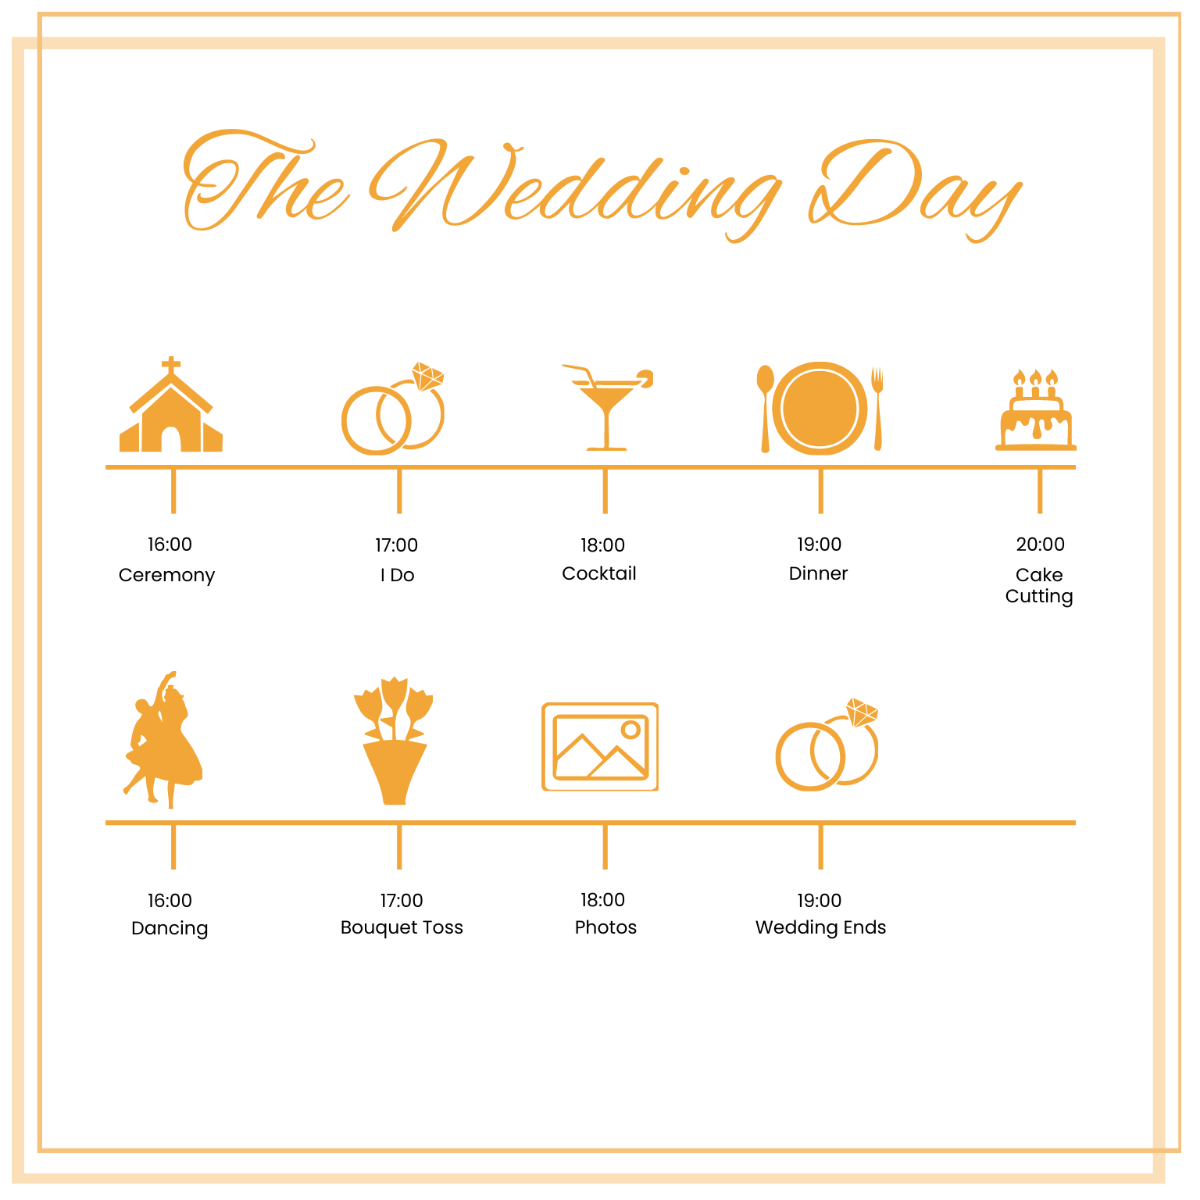 Wedding Timeline Vector Template